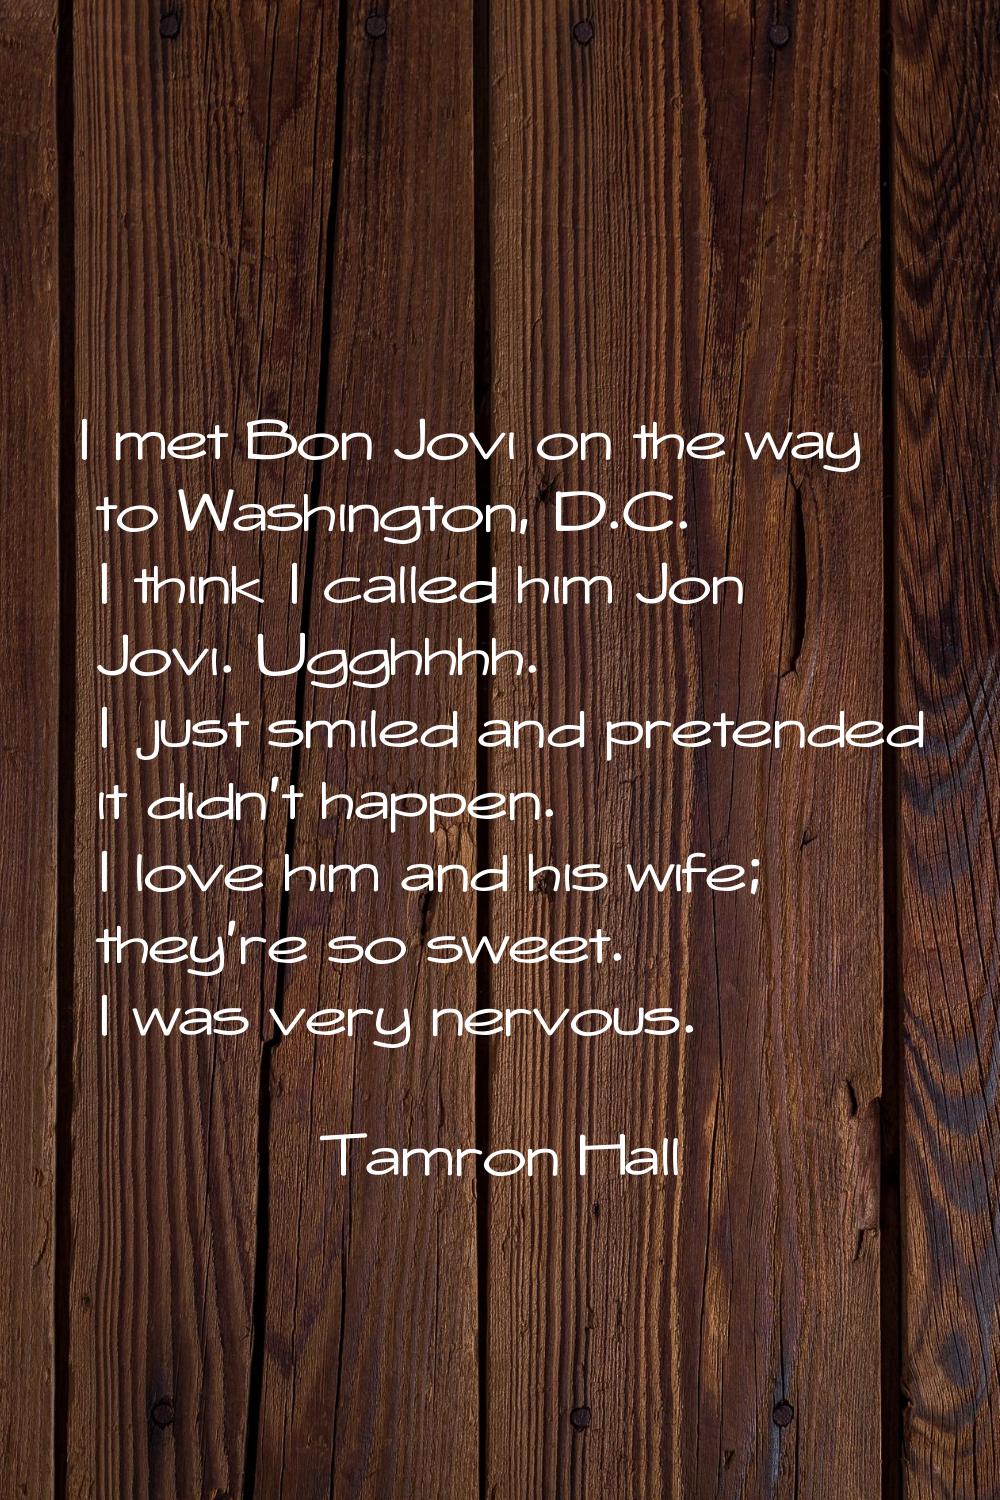 I met Bon Jovi on the way to Washington, D.C. I think I called him Jon Jovi. Ugghhhh. I just smiled